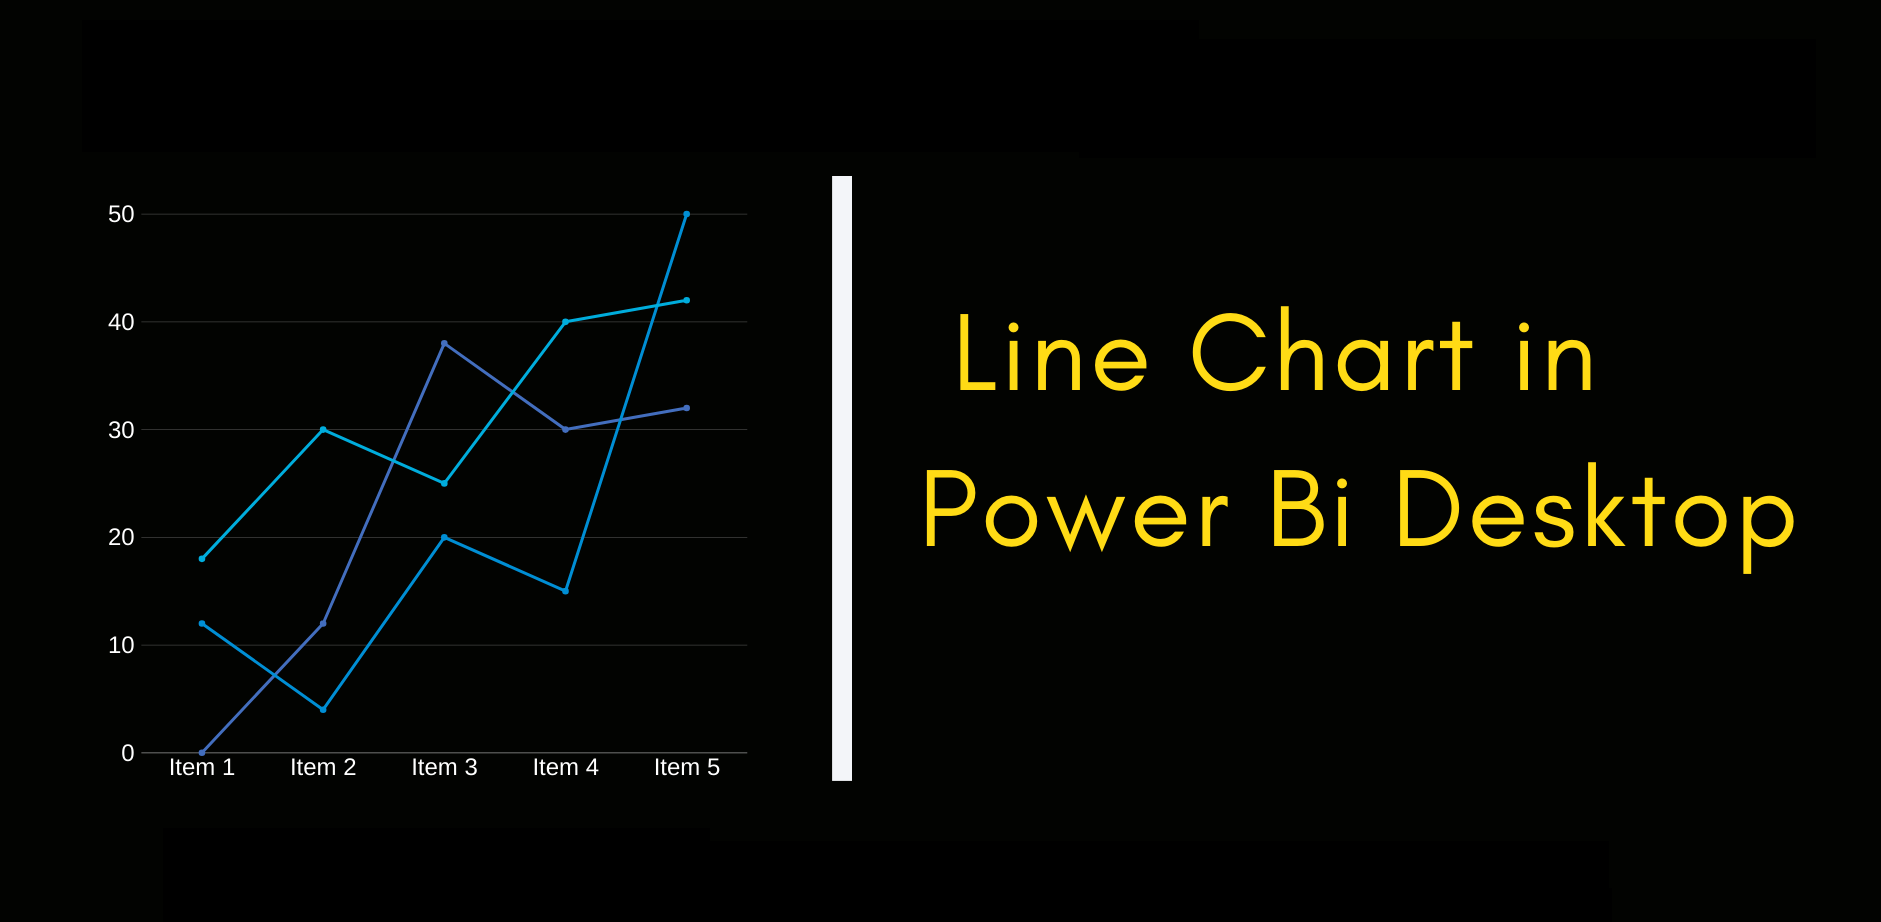 Line Chart in Power Bi Desktop